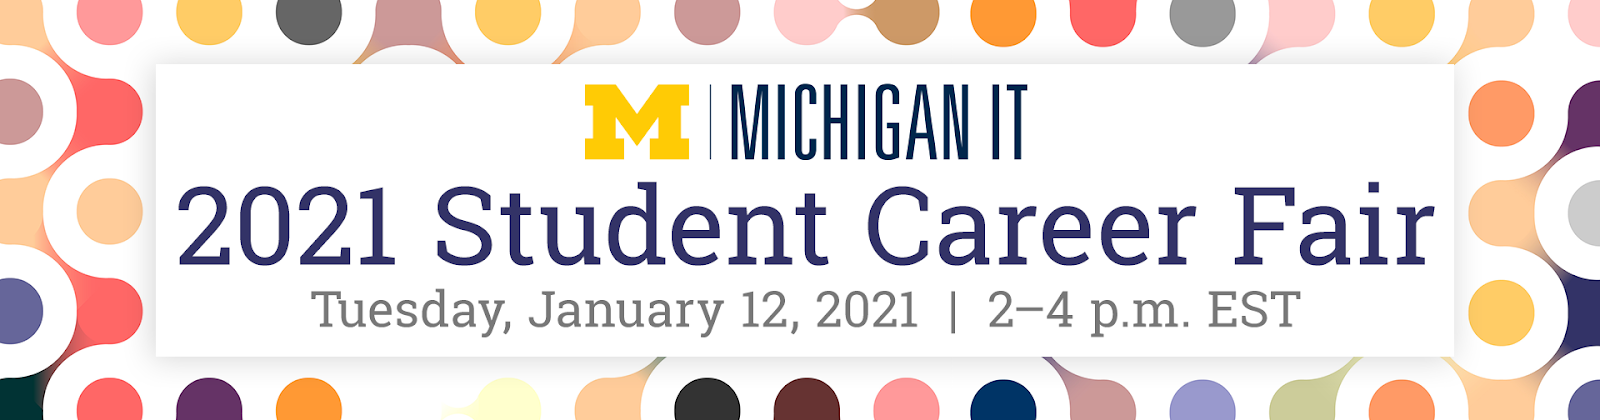 Michigan IT Student Career Fair